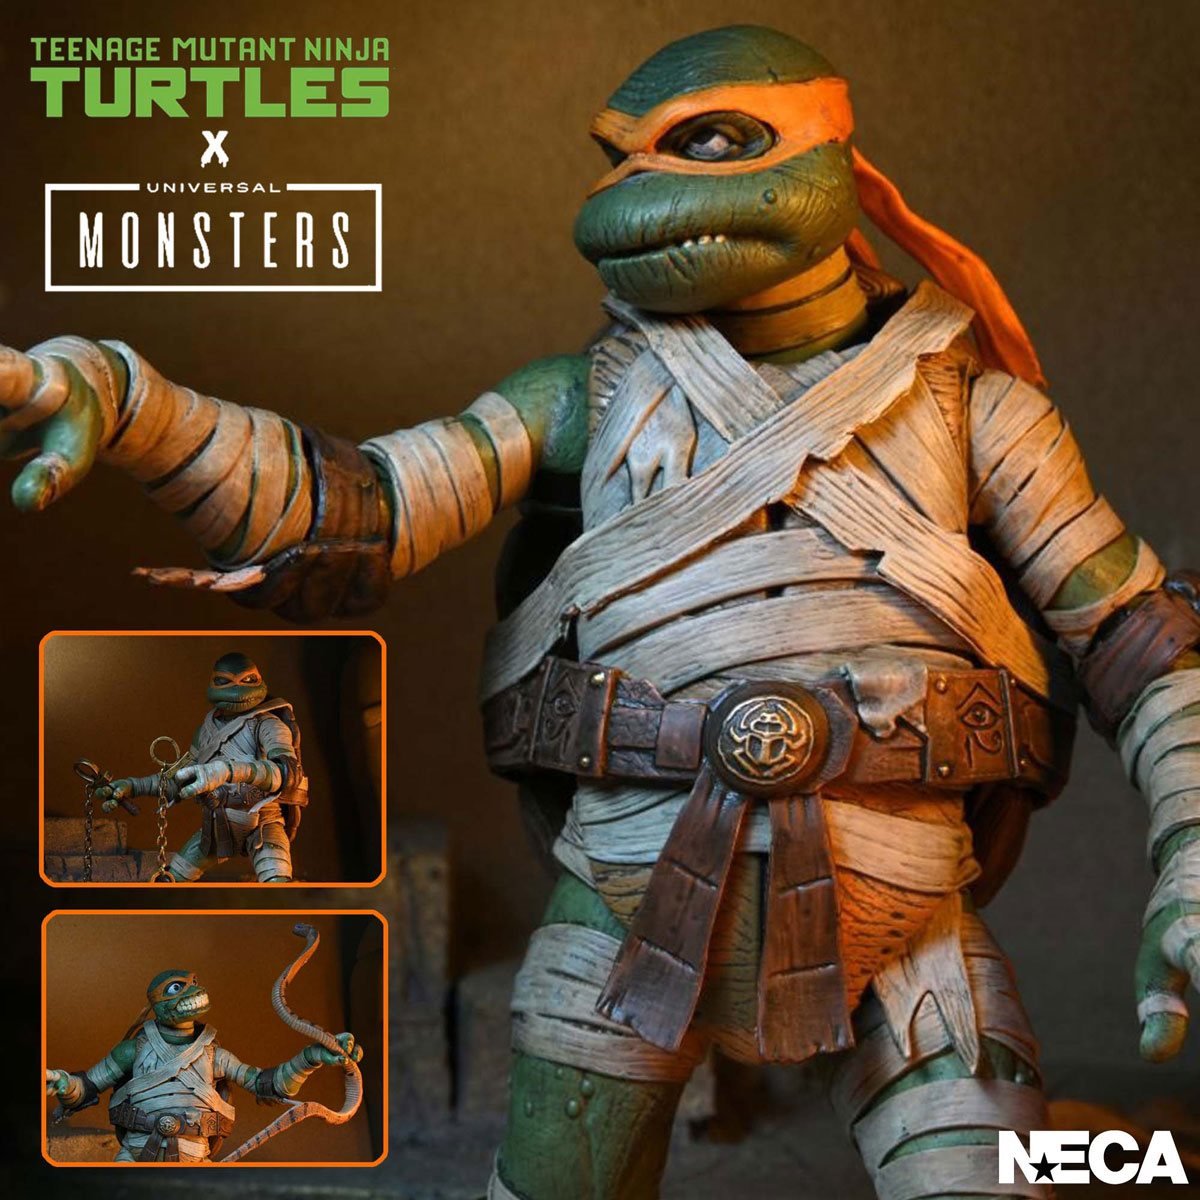 NECA Teenage Mutant Ninja Turtles 7 inch Scale Action Figure for sale online 